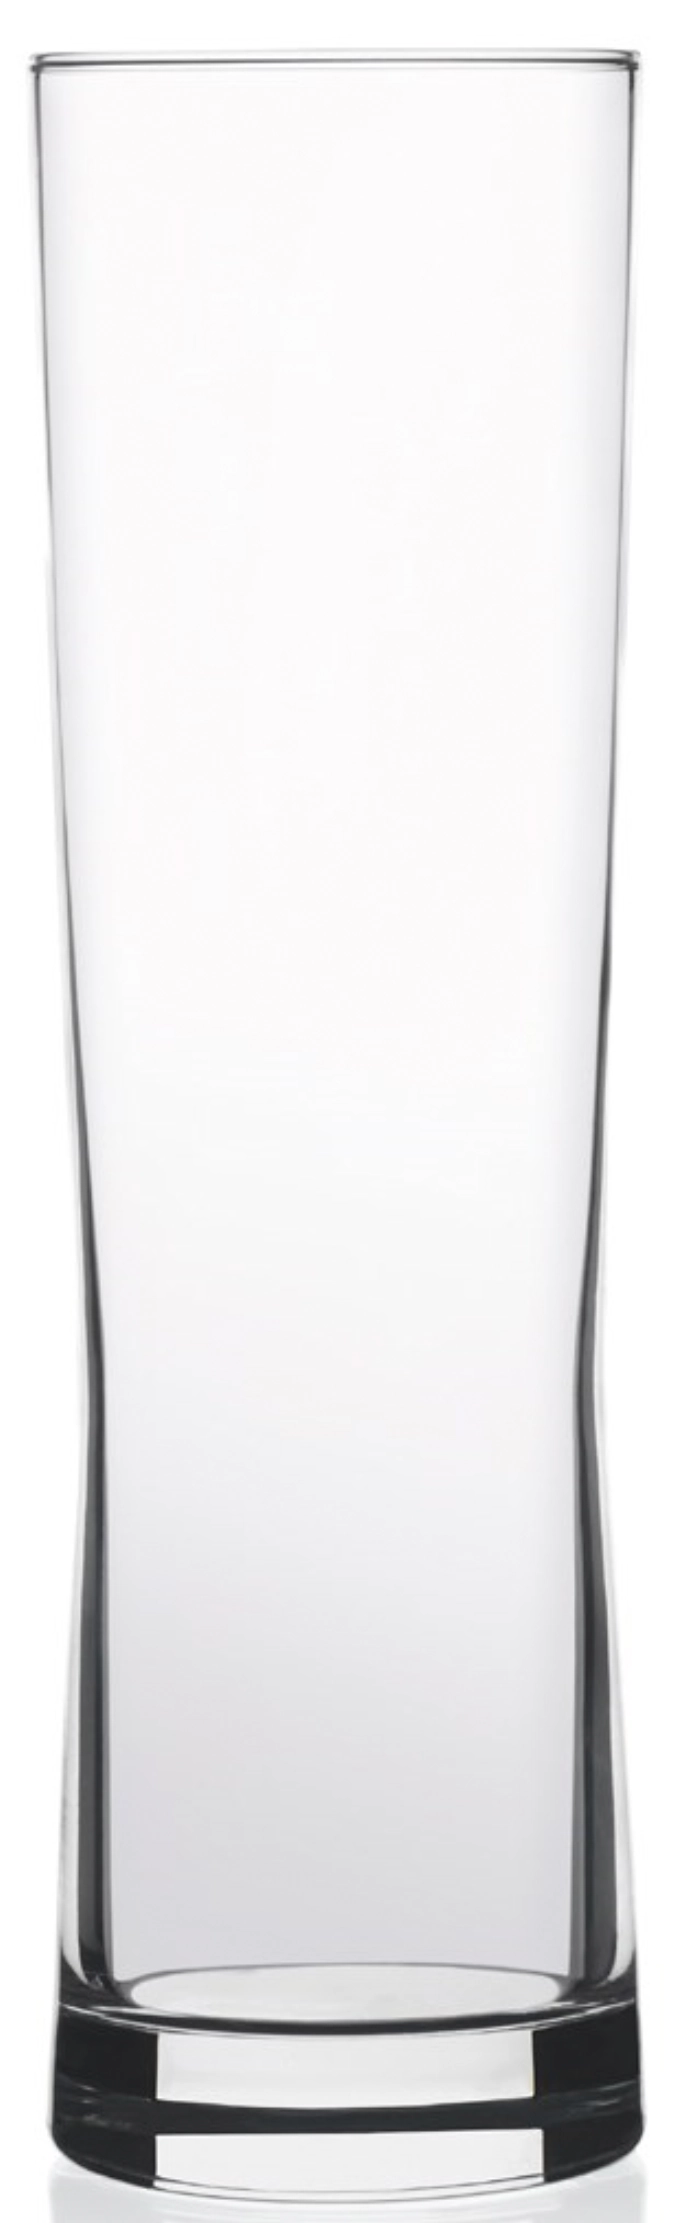 Fresh Glas-Becher 0.2 l, 2/4cl /-/ 17.5cm